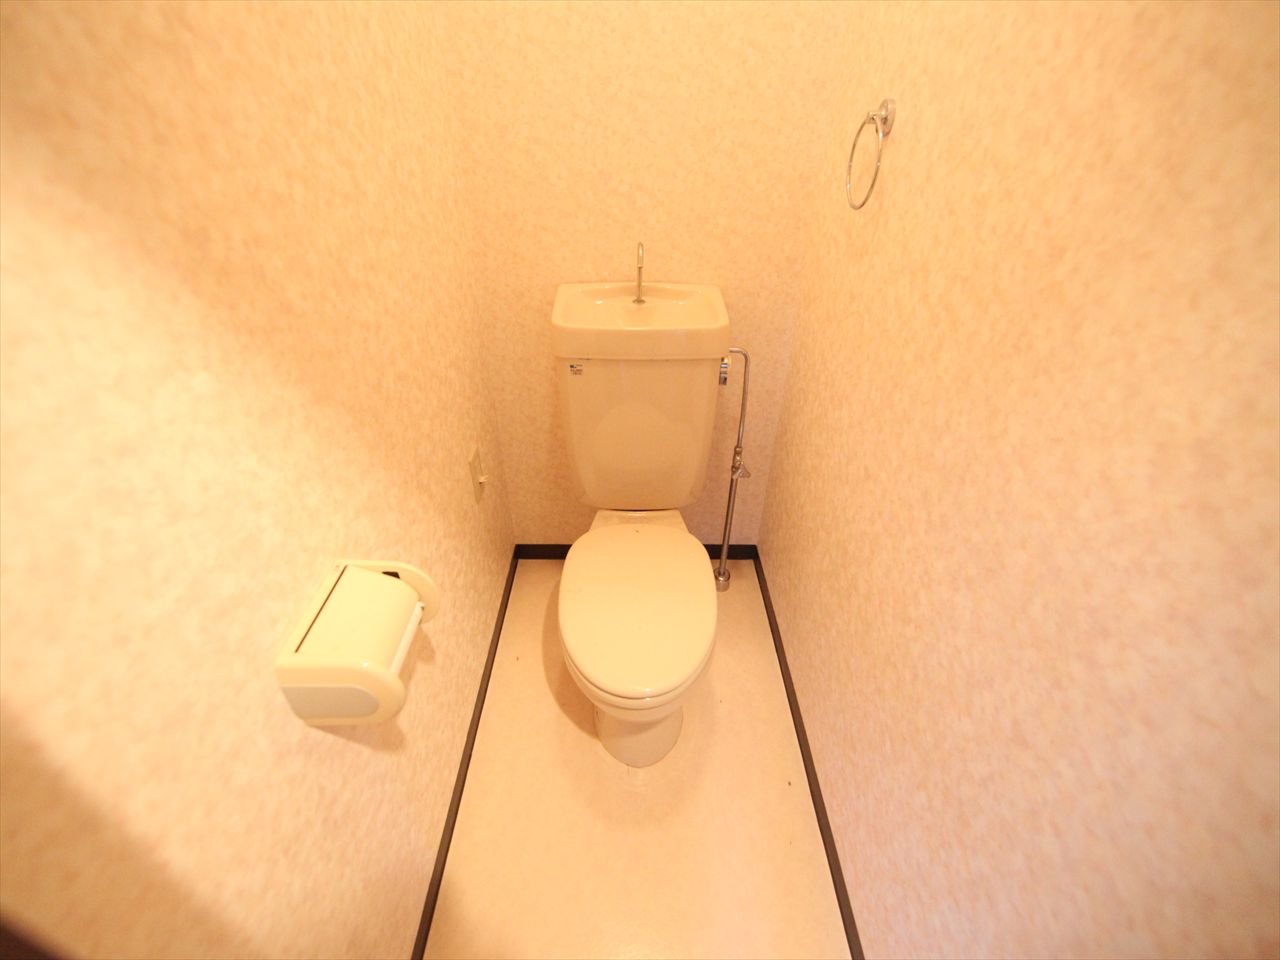 Toilet. toilet Warm water washing toilet seat mounted Allowed